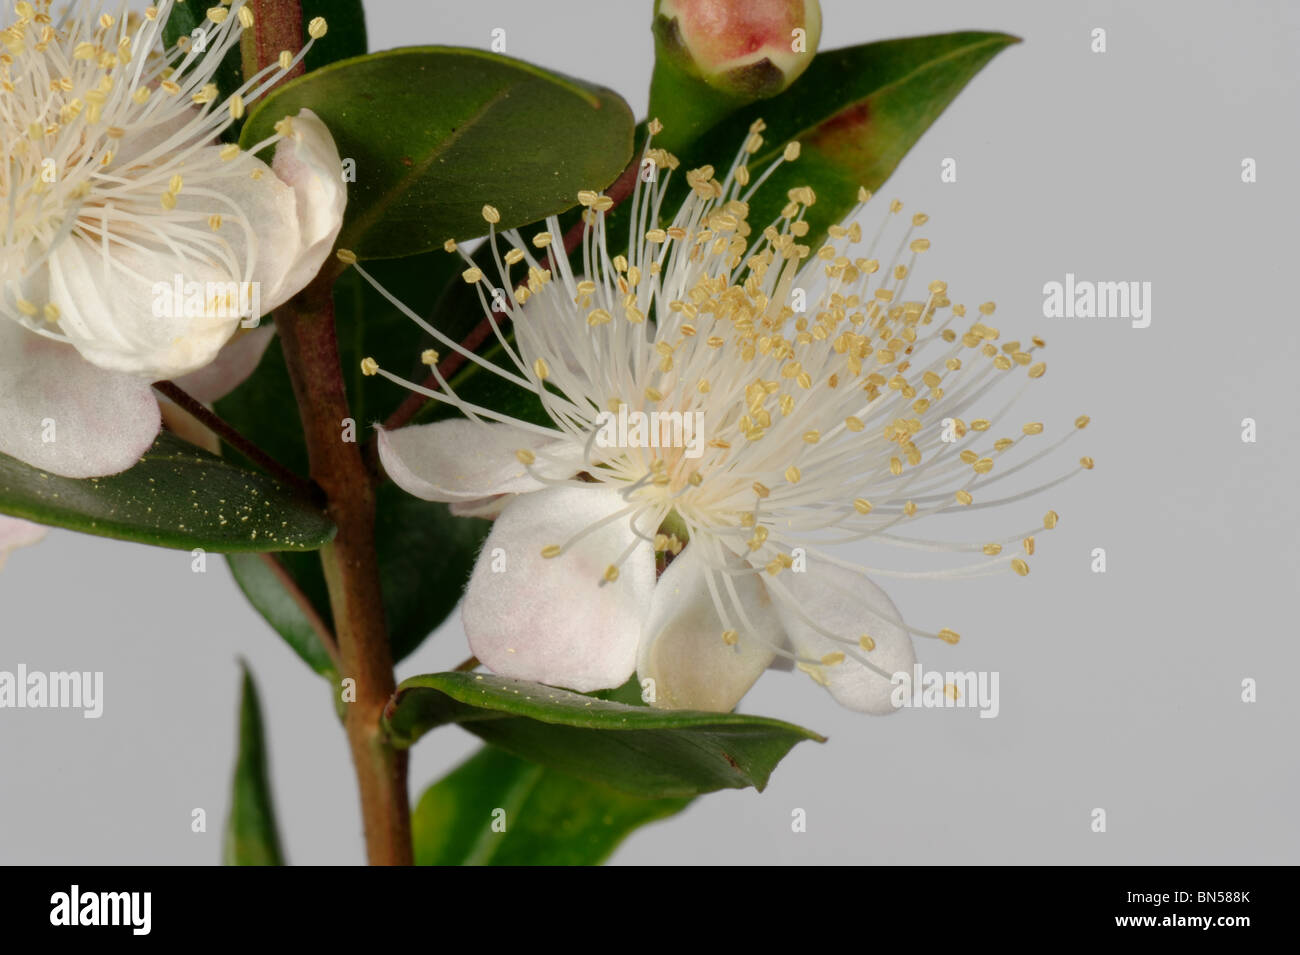 Myrtle (Myrtus communis) shrub flower and bold filaments against a white background Stock Photo